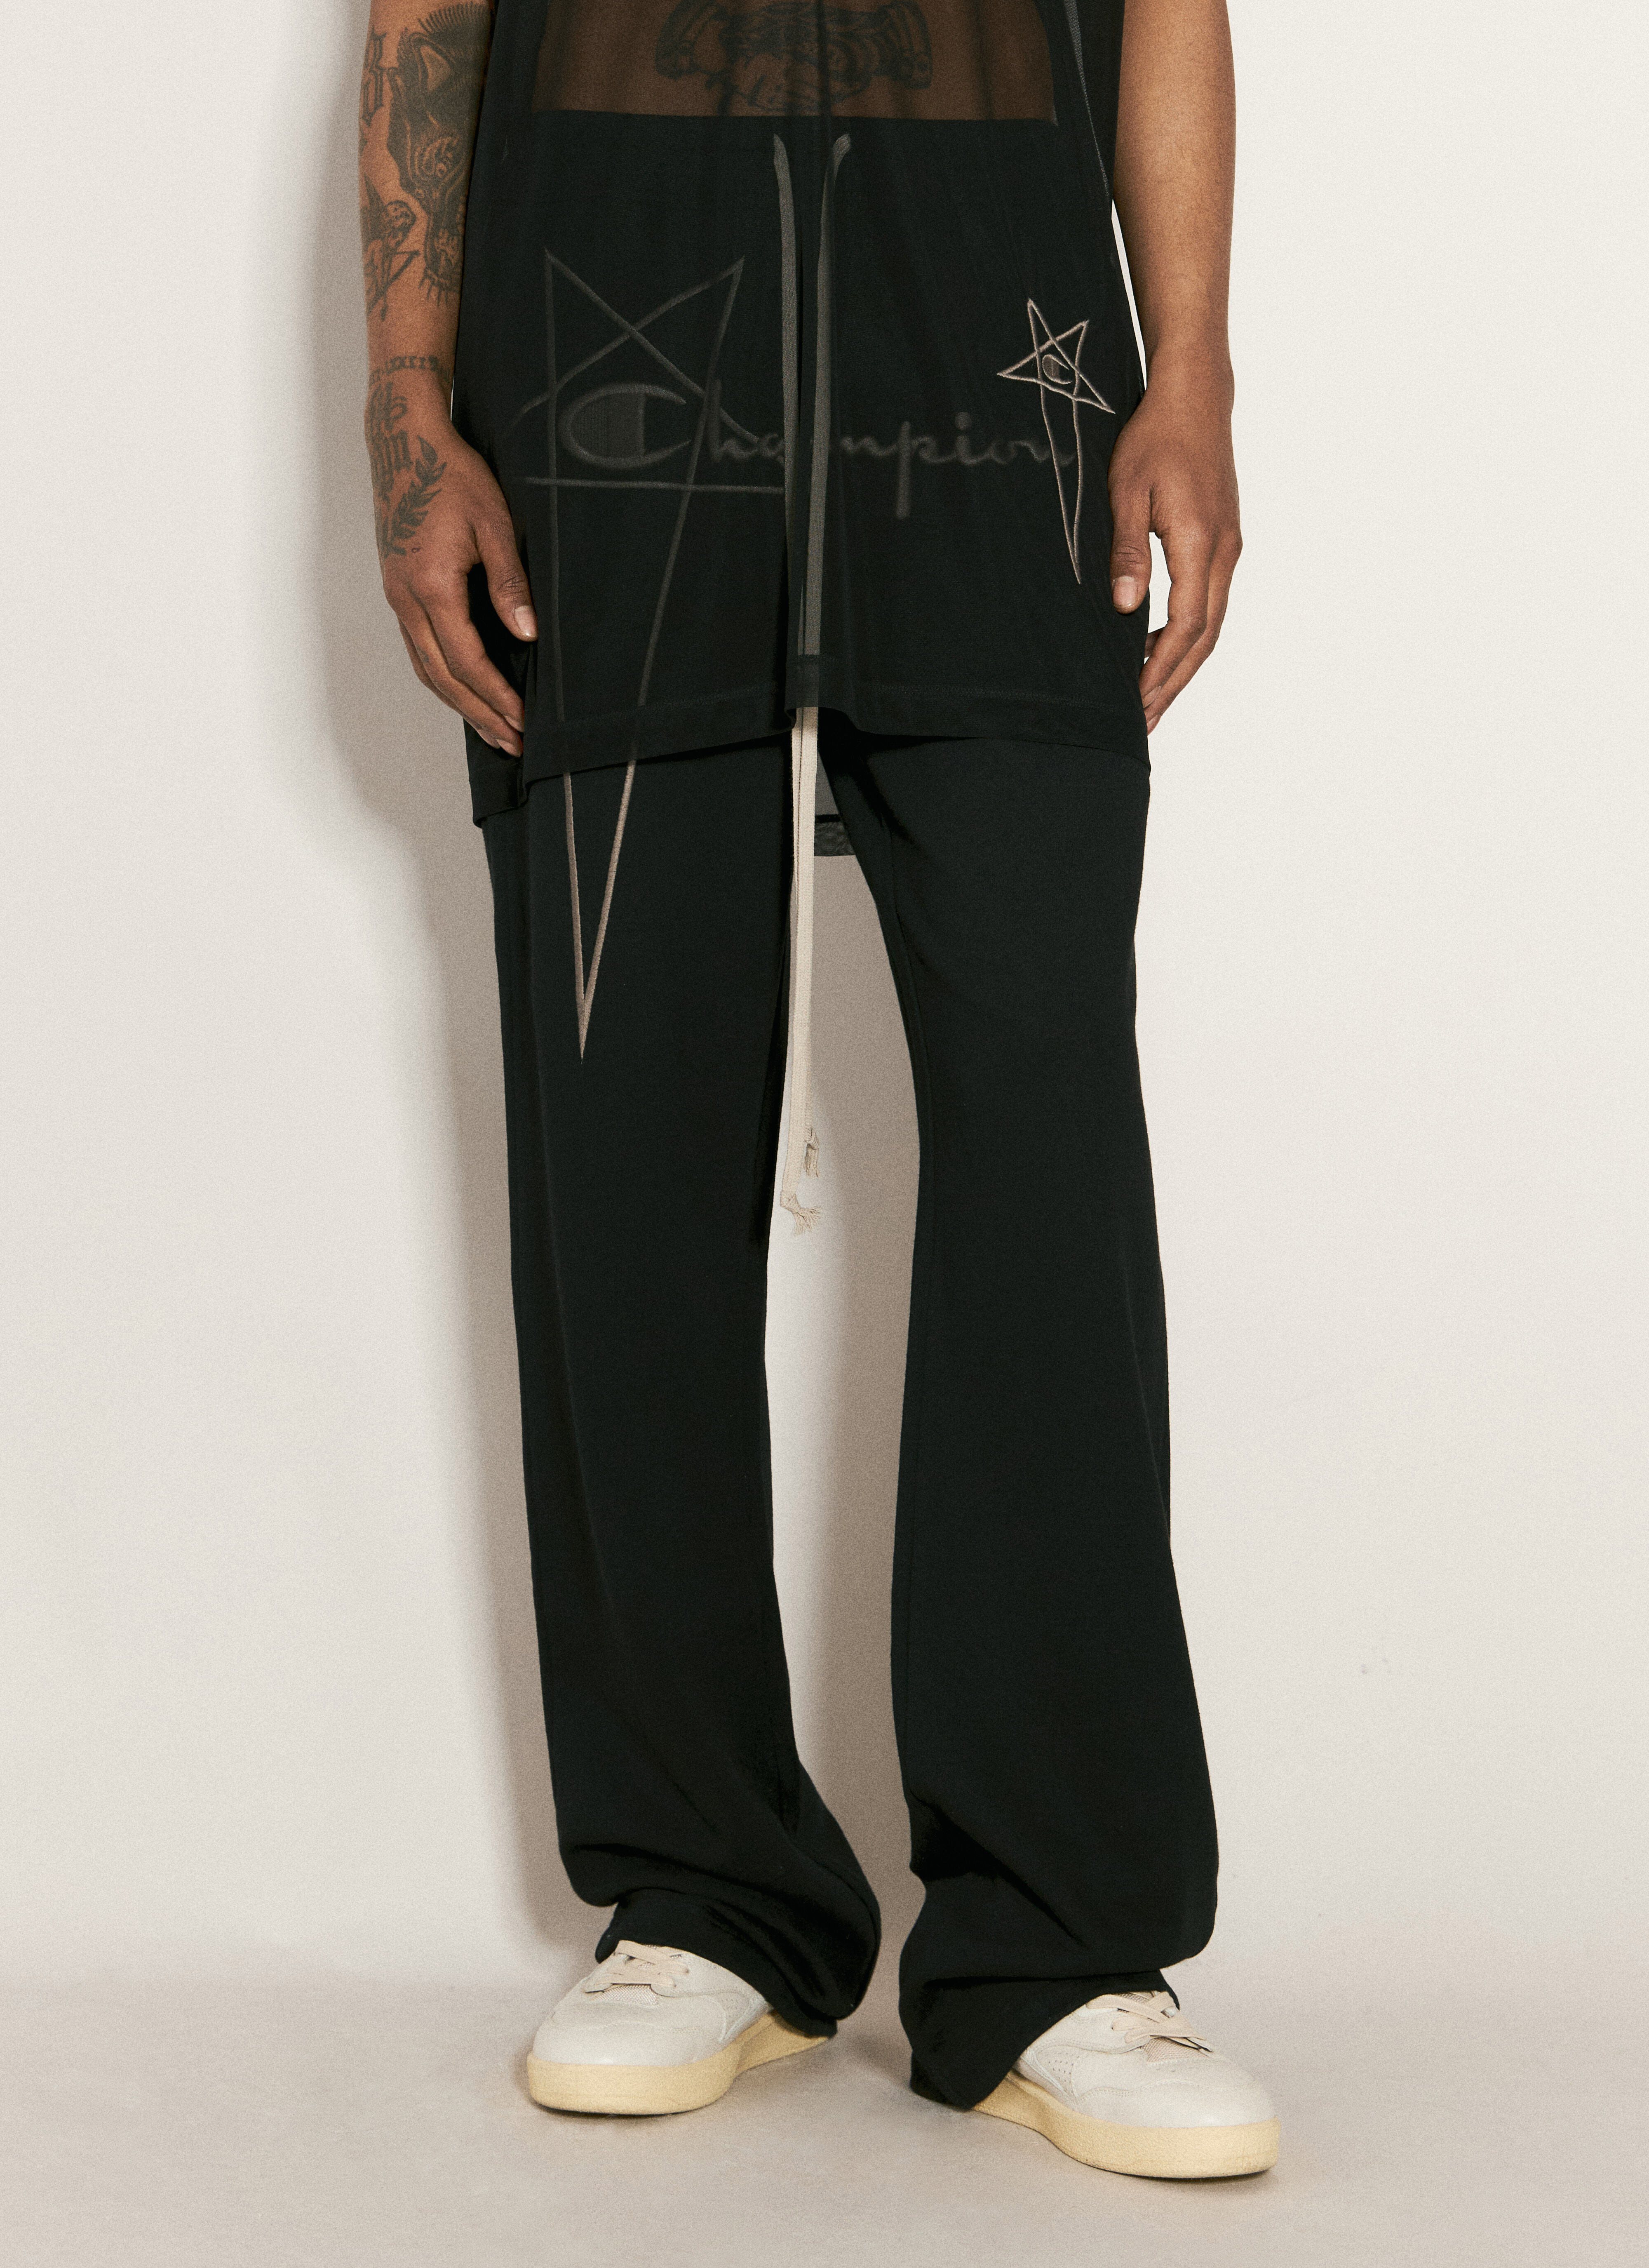 Rick Owens x Champion Dietrich Drawstring Track Pants Black roc0157002